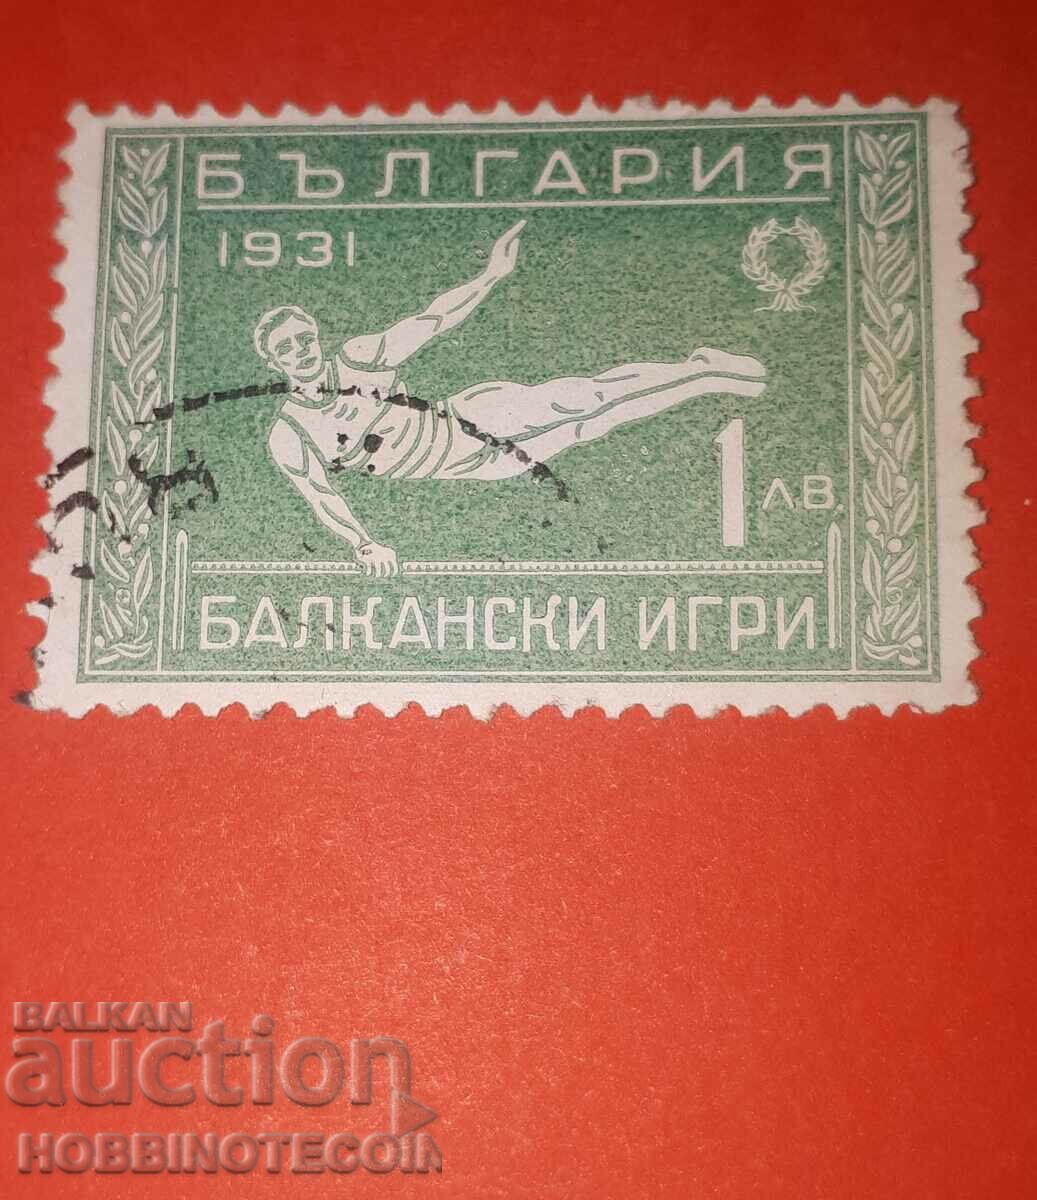 2 II BALKAN GAMES SECOND BALKANIAD BK269 1 BGN 1933 stamp1